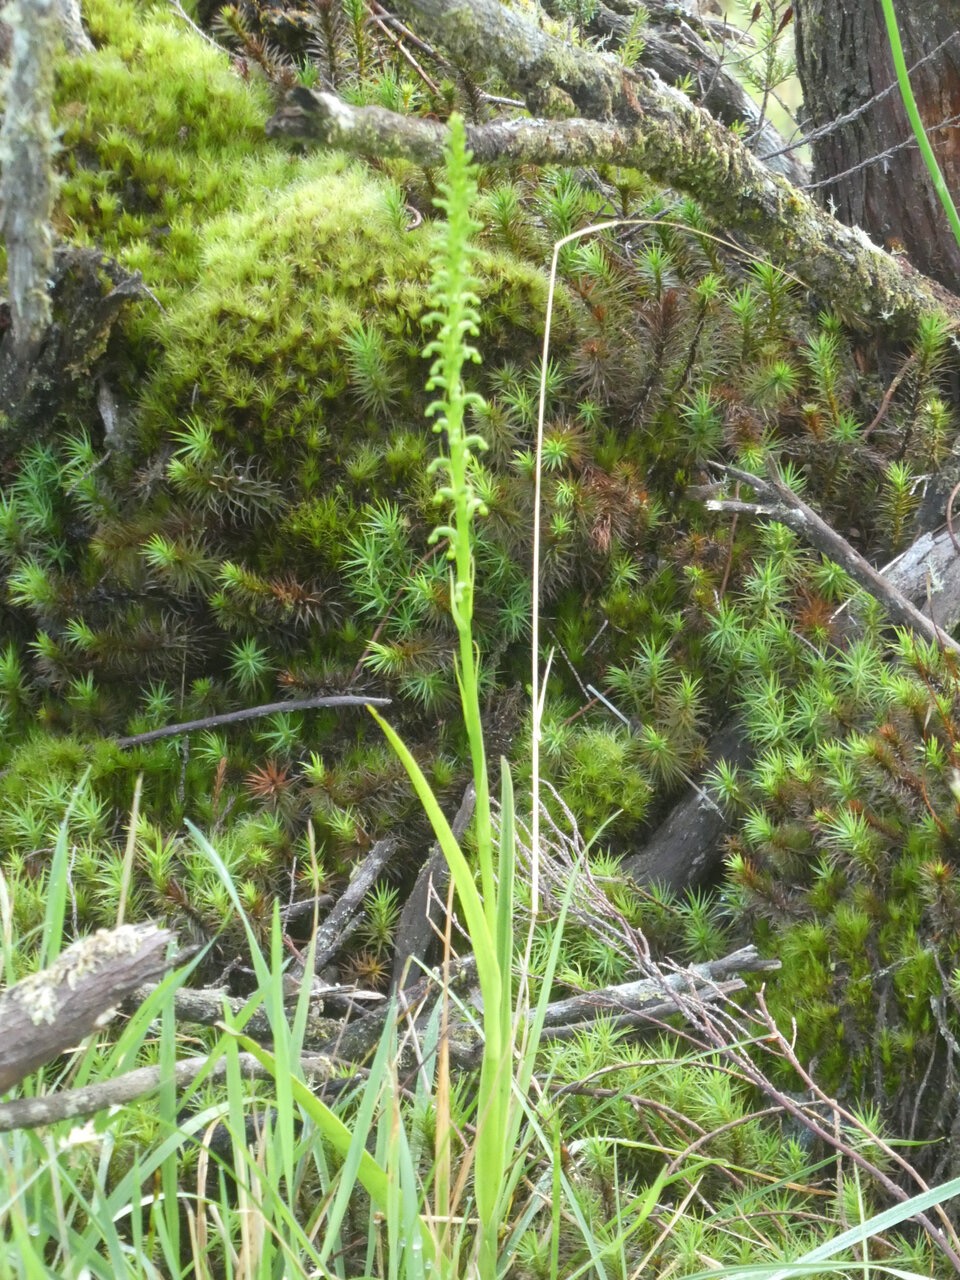 Benthamia spiralis - ORCHIDOIDEAE - Indigene Reunion - P1050879.jpg